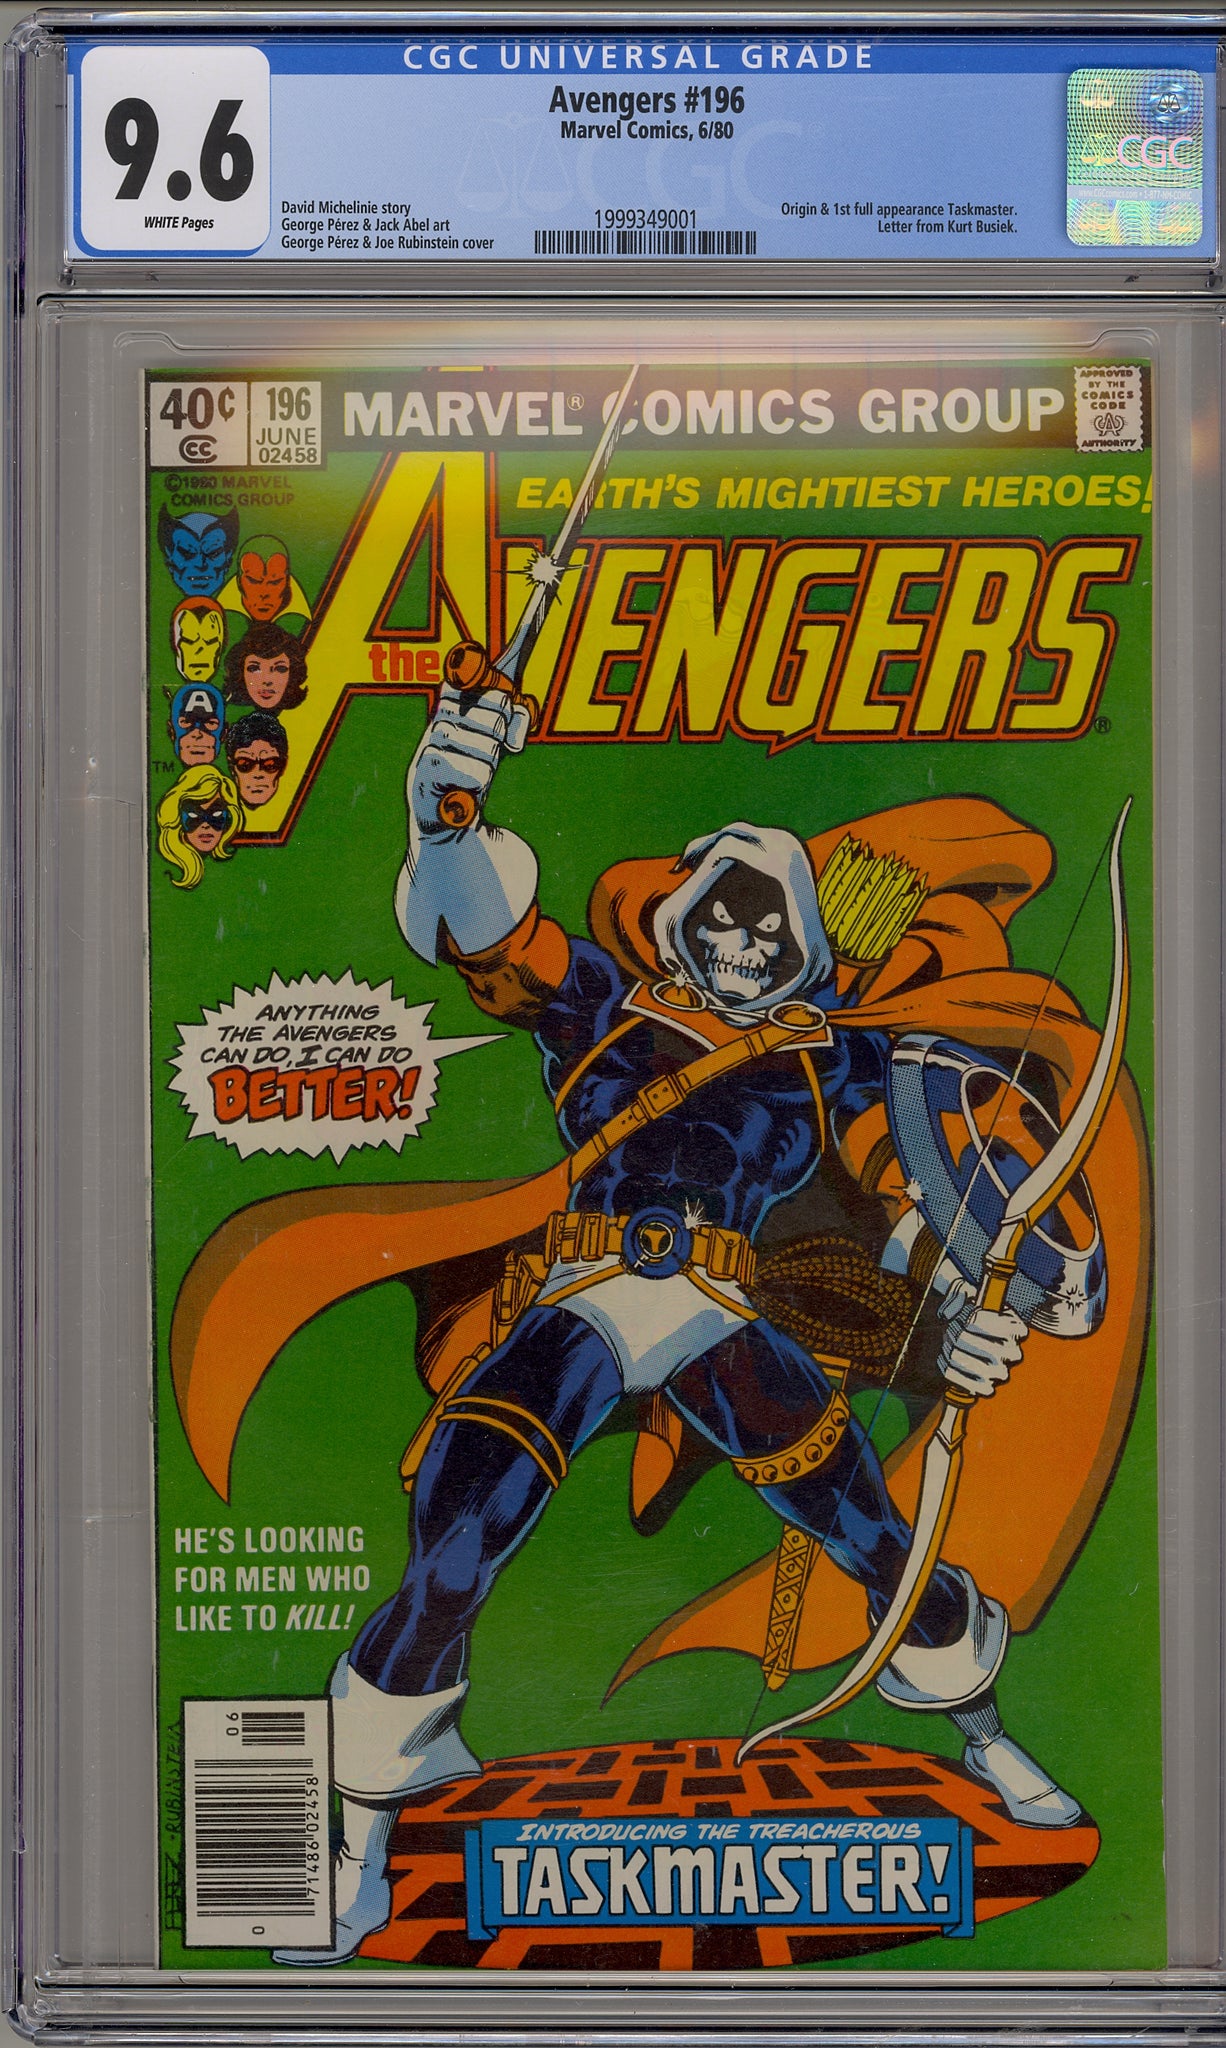 Avengers #196 (1980) newsstand edition - Taskmaster